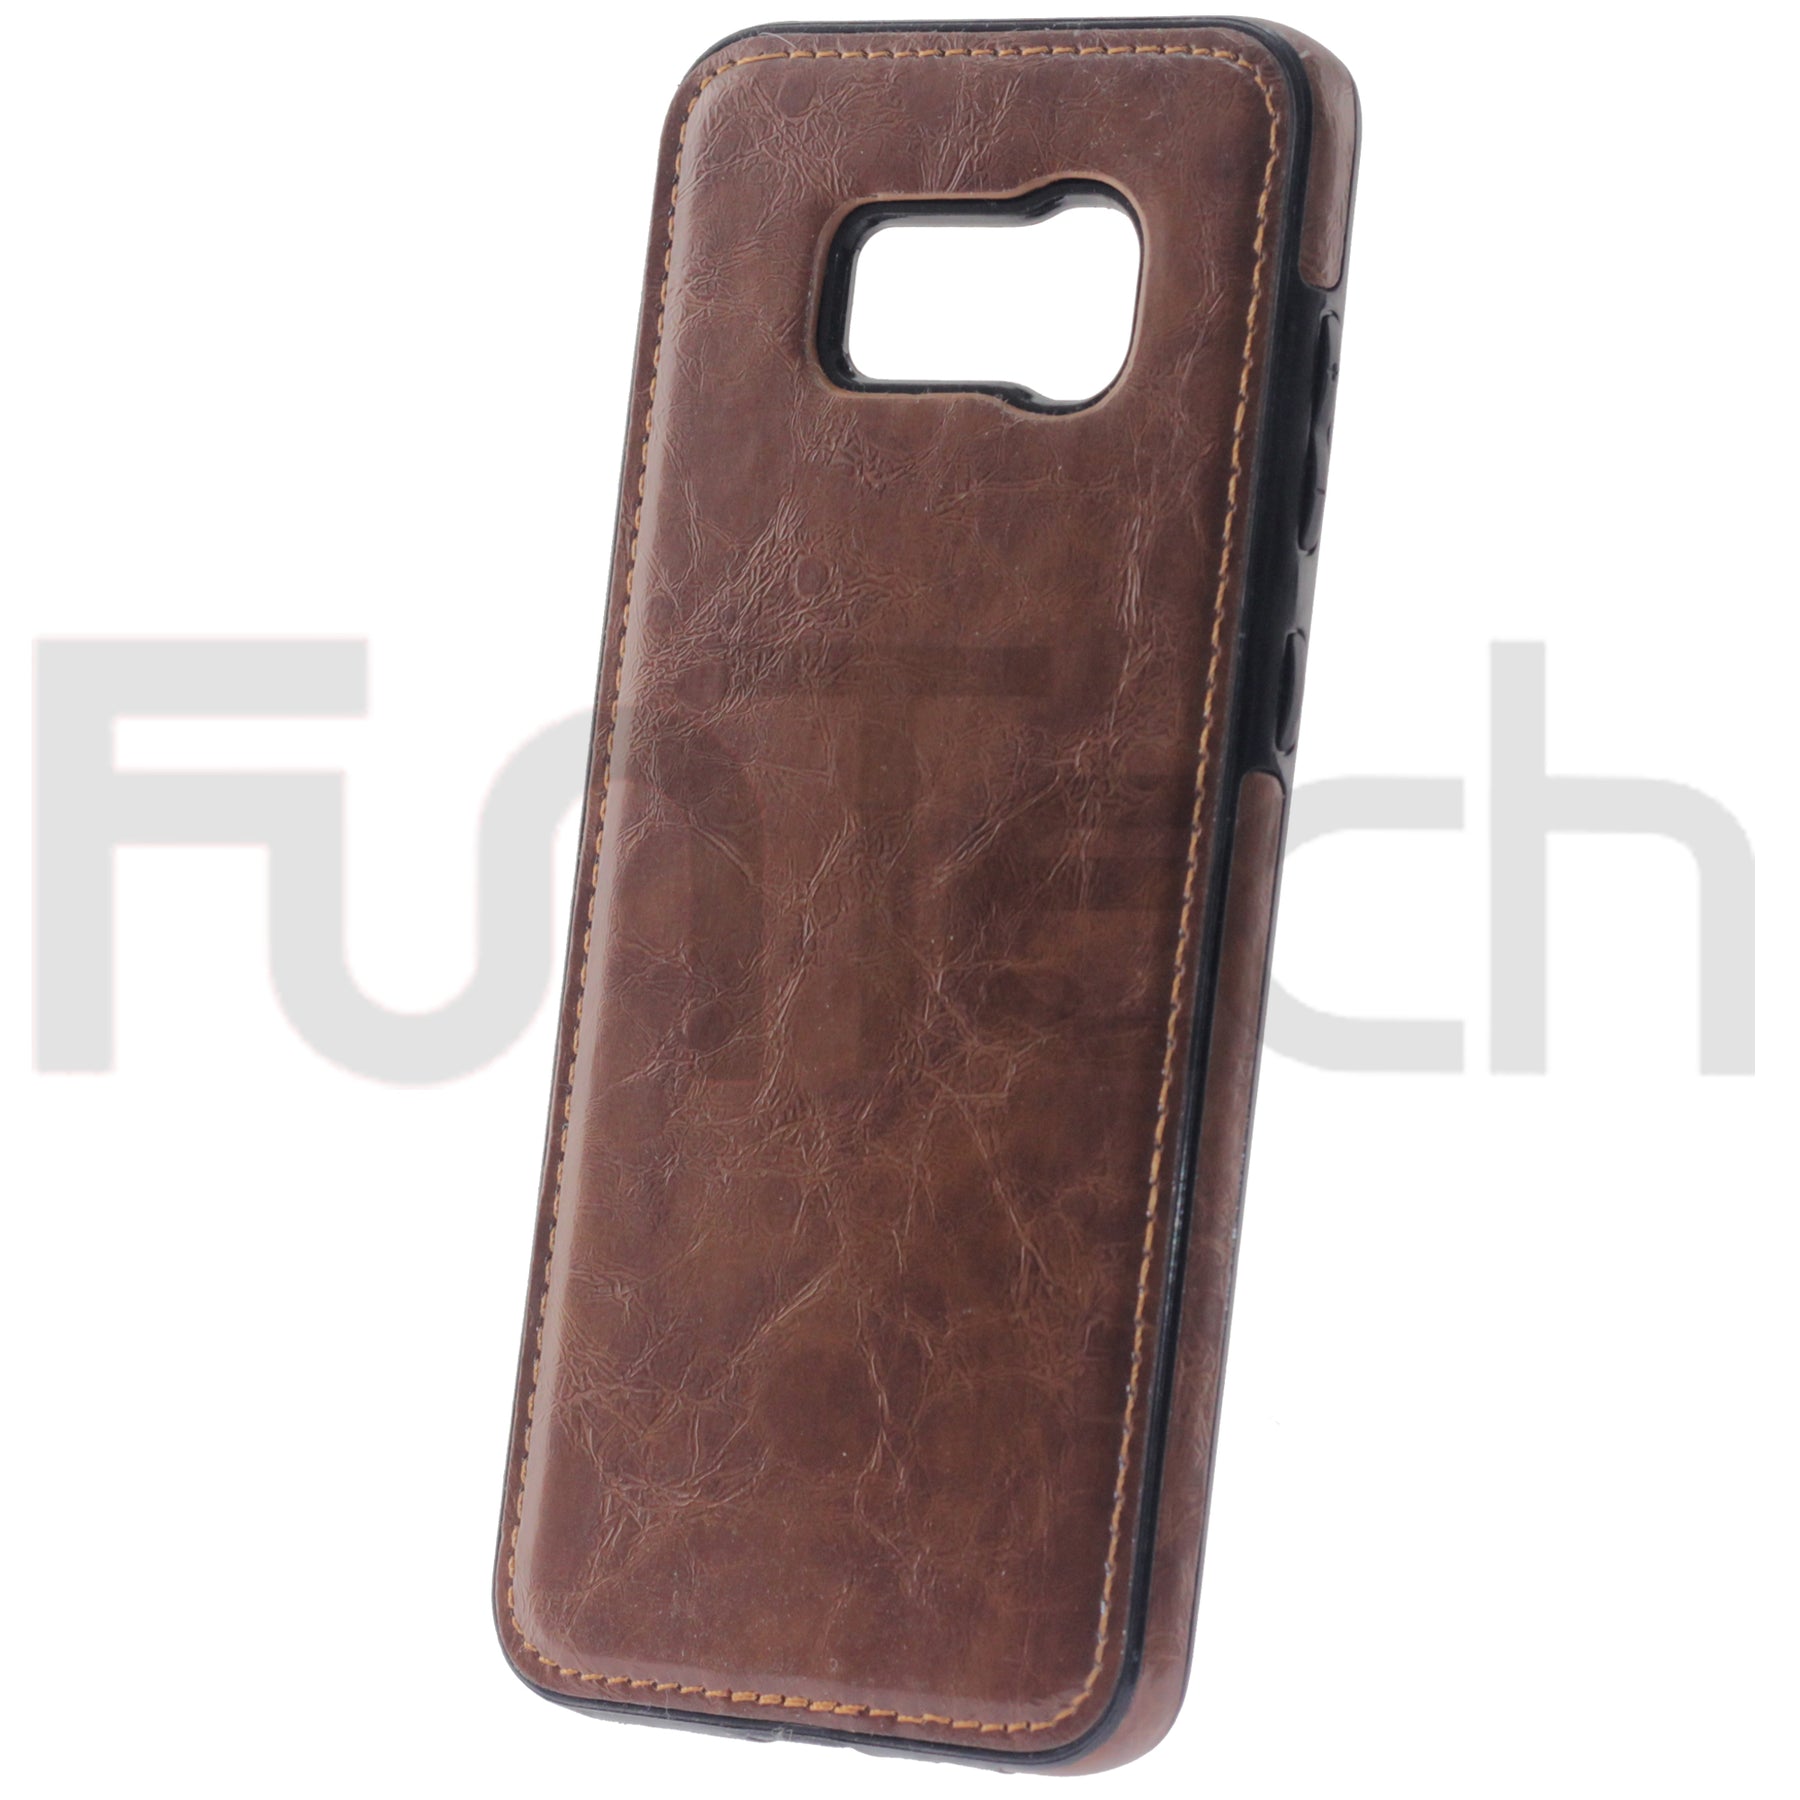 Samsung S8+, Leather Back Case, Color Brown.